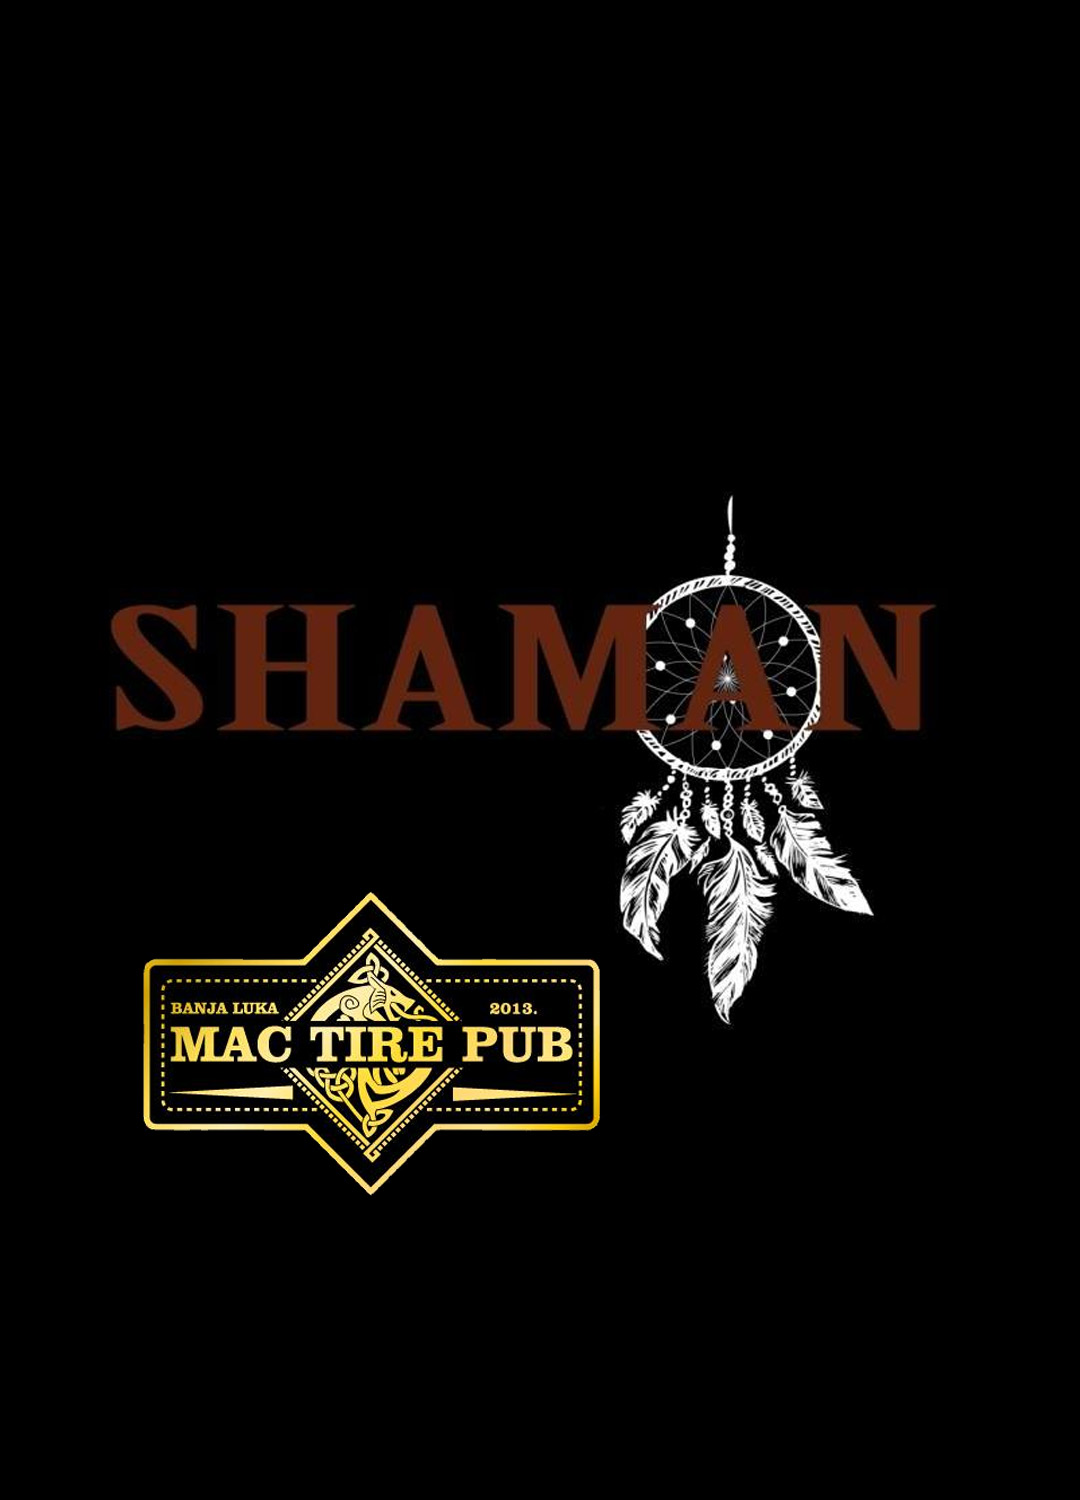 Shaman Mac Tire pub